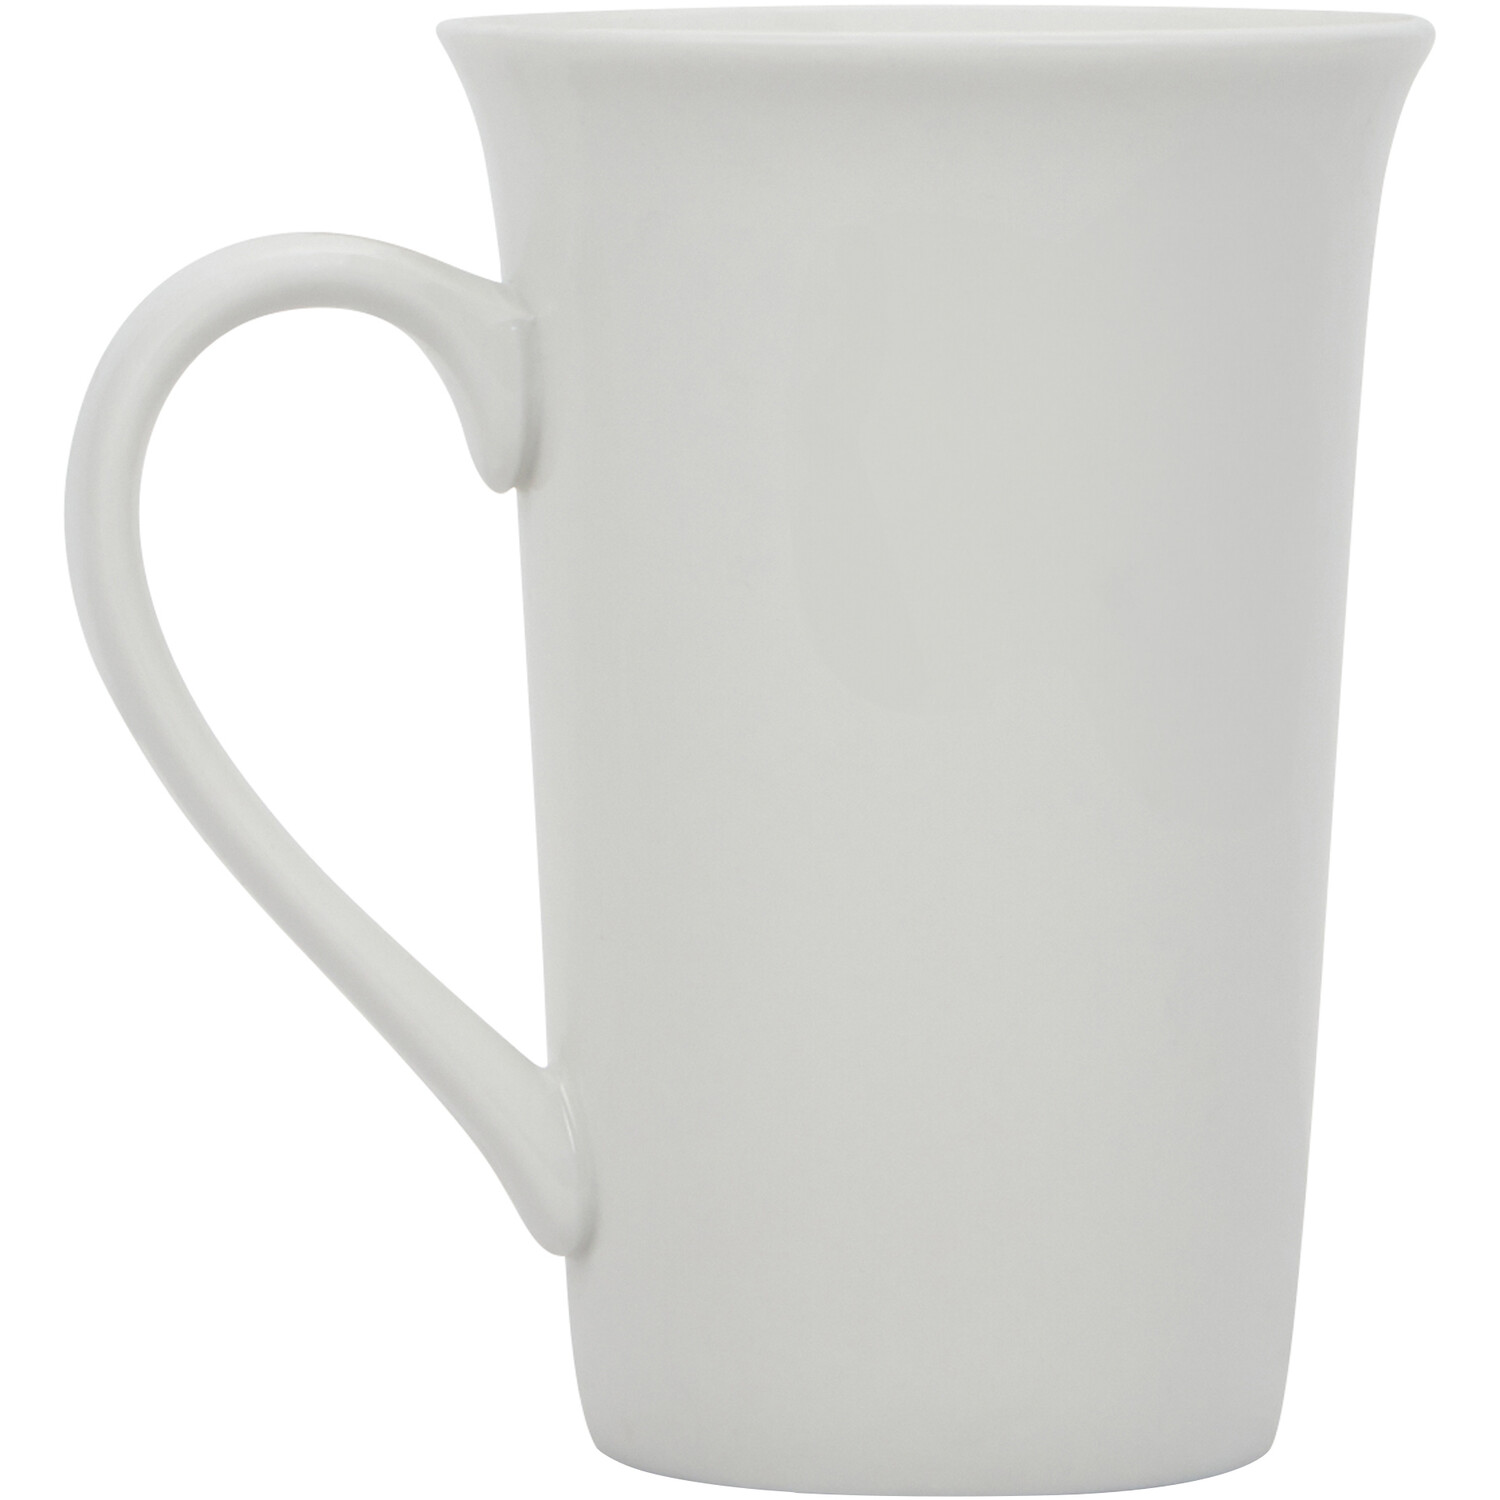 Regency Porcelain Latte Mug - White Image 2